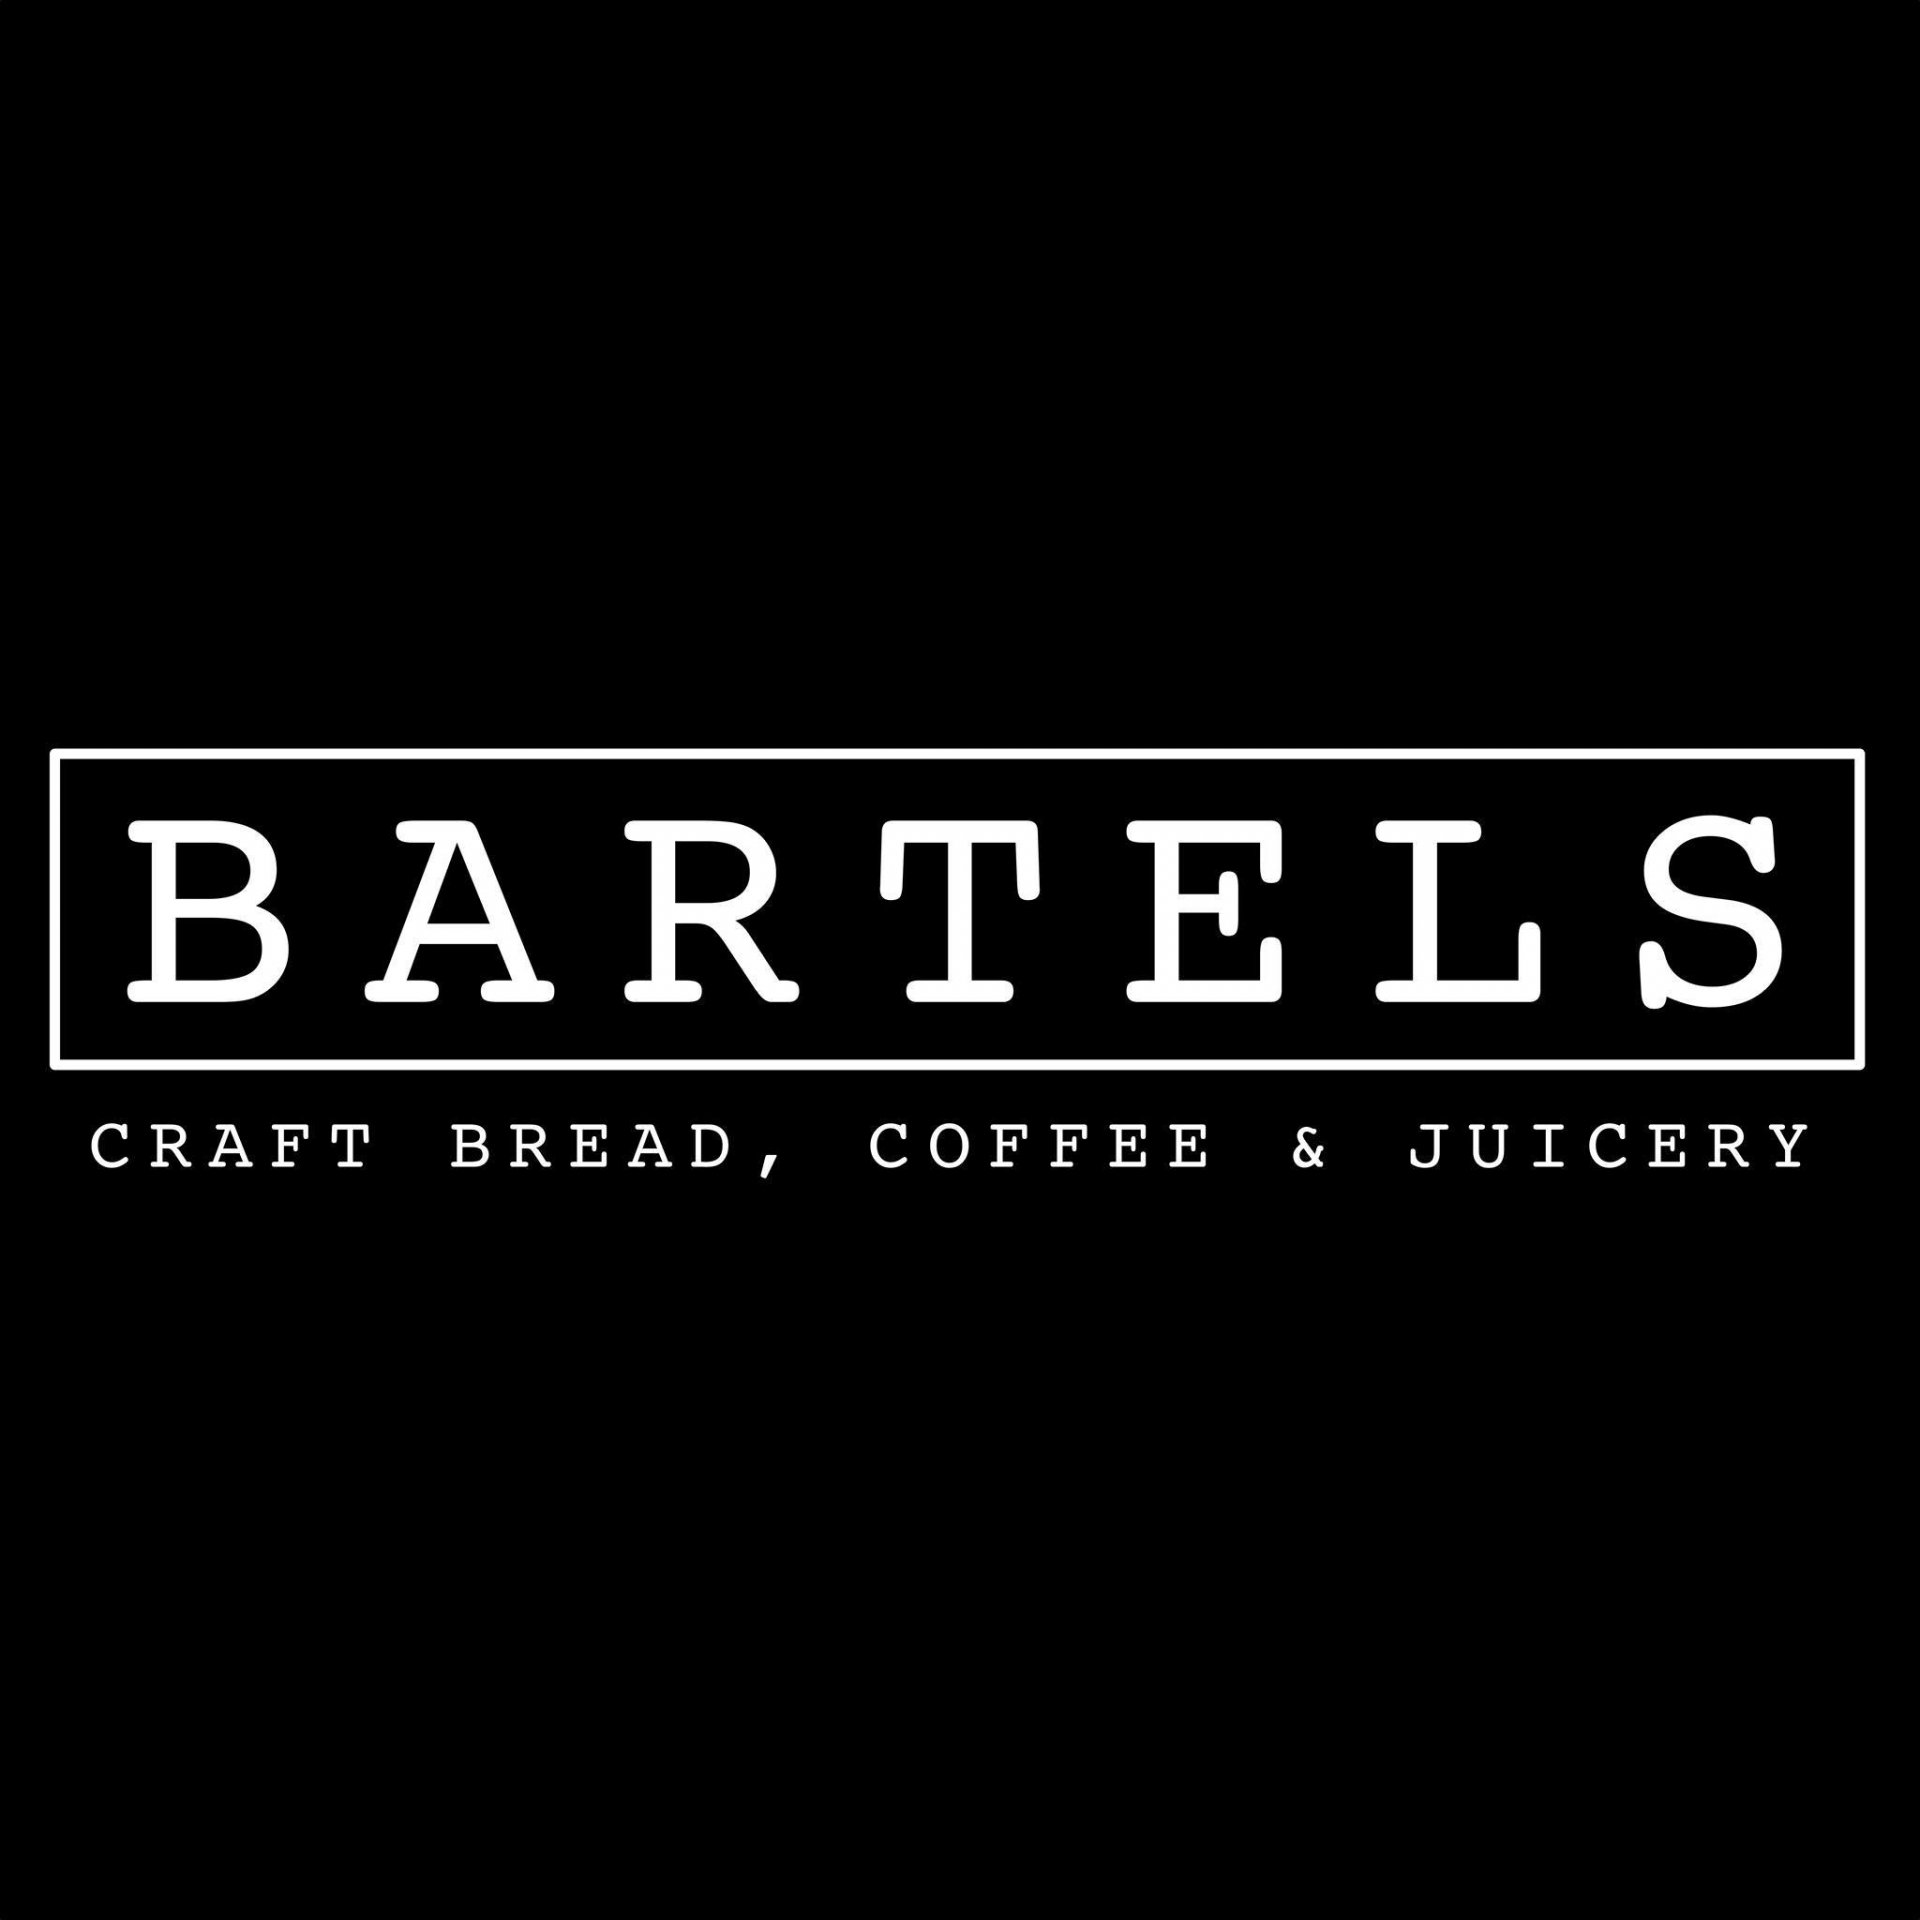 Bartels Craft Bread, Coffee & Juicery